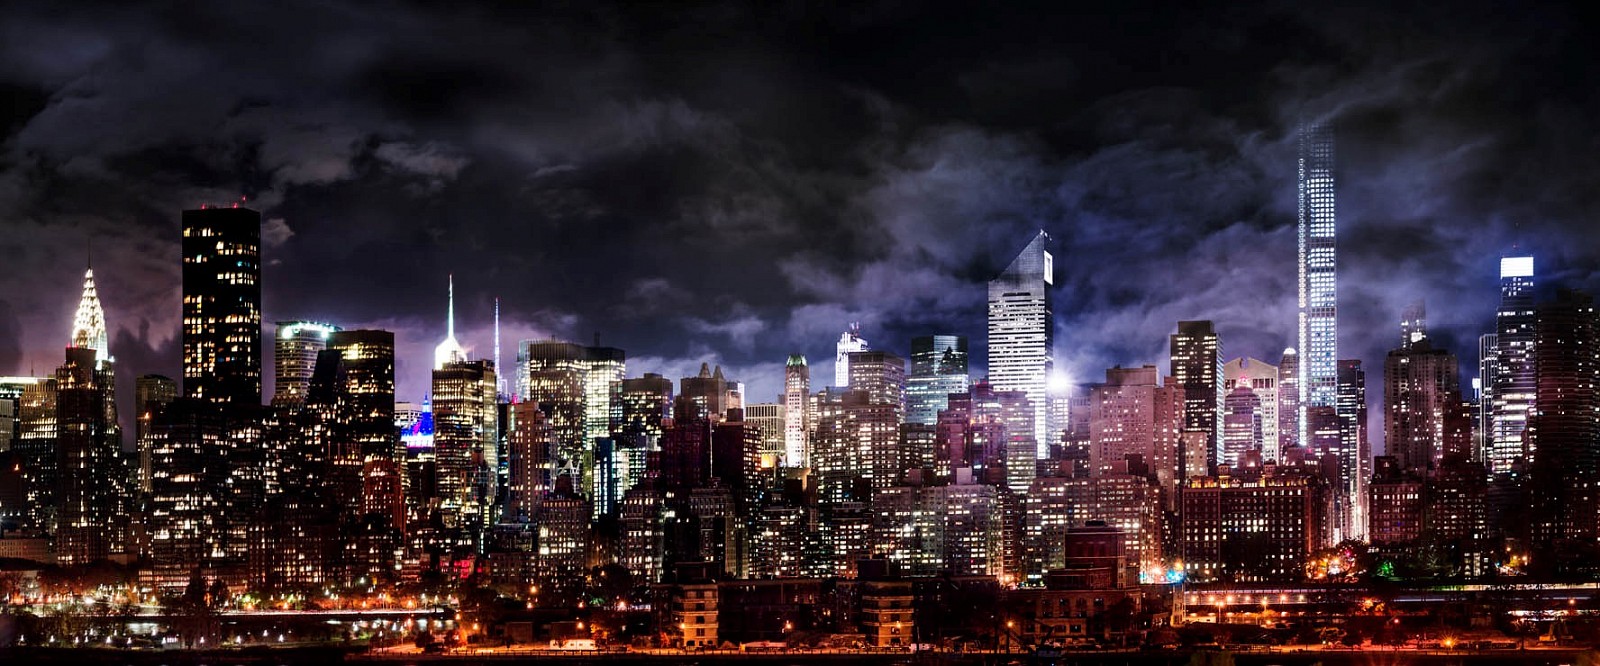 David Drebin, Manhattan Nights, 2014
Digital C Print, 20 x 48 inches, 30 x 72 inches and 40 x 96 inches